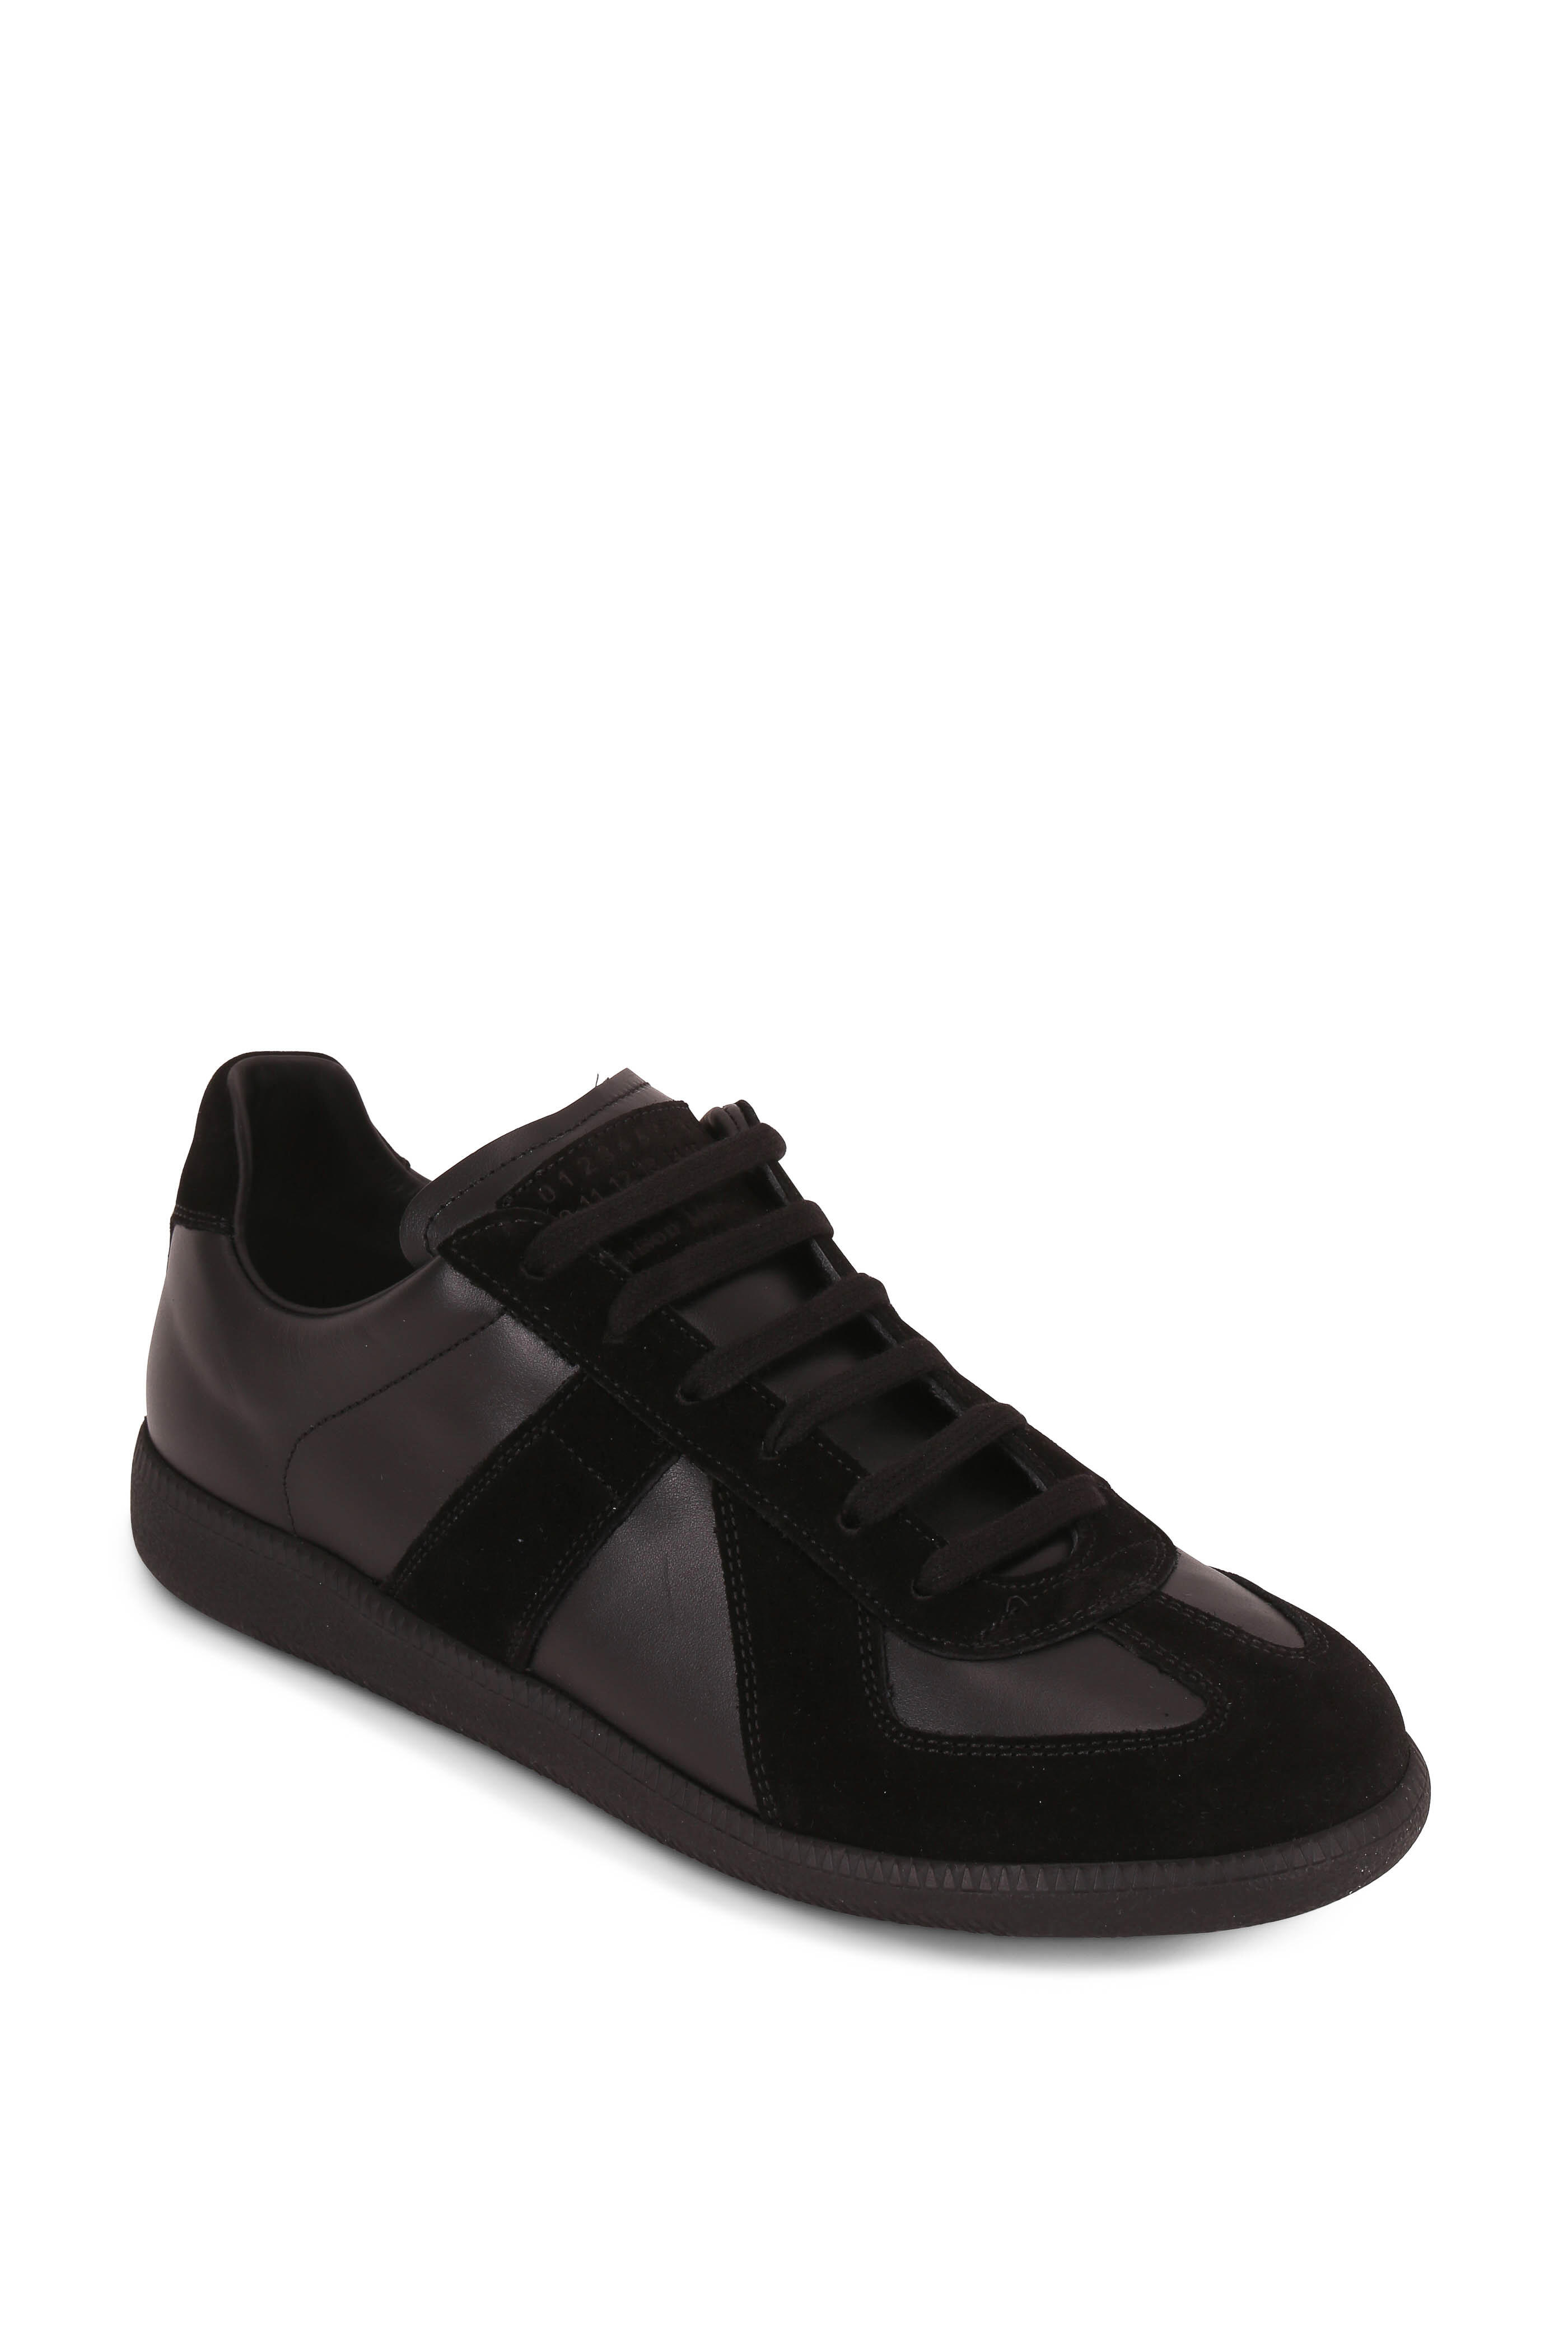 Maison Margiela - Replica Black Leather & Suede Low Top Sneaker